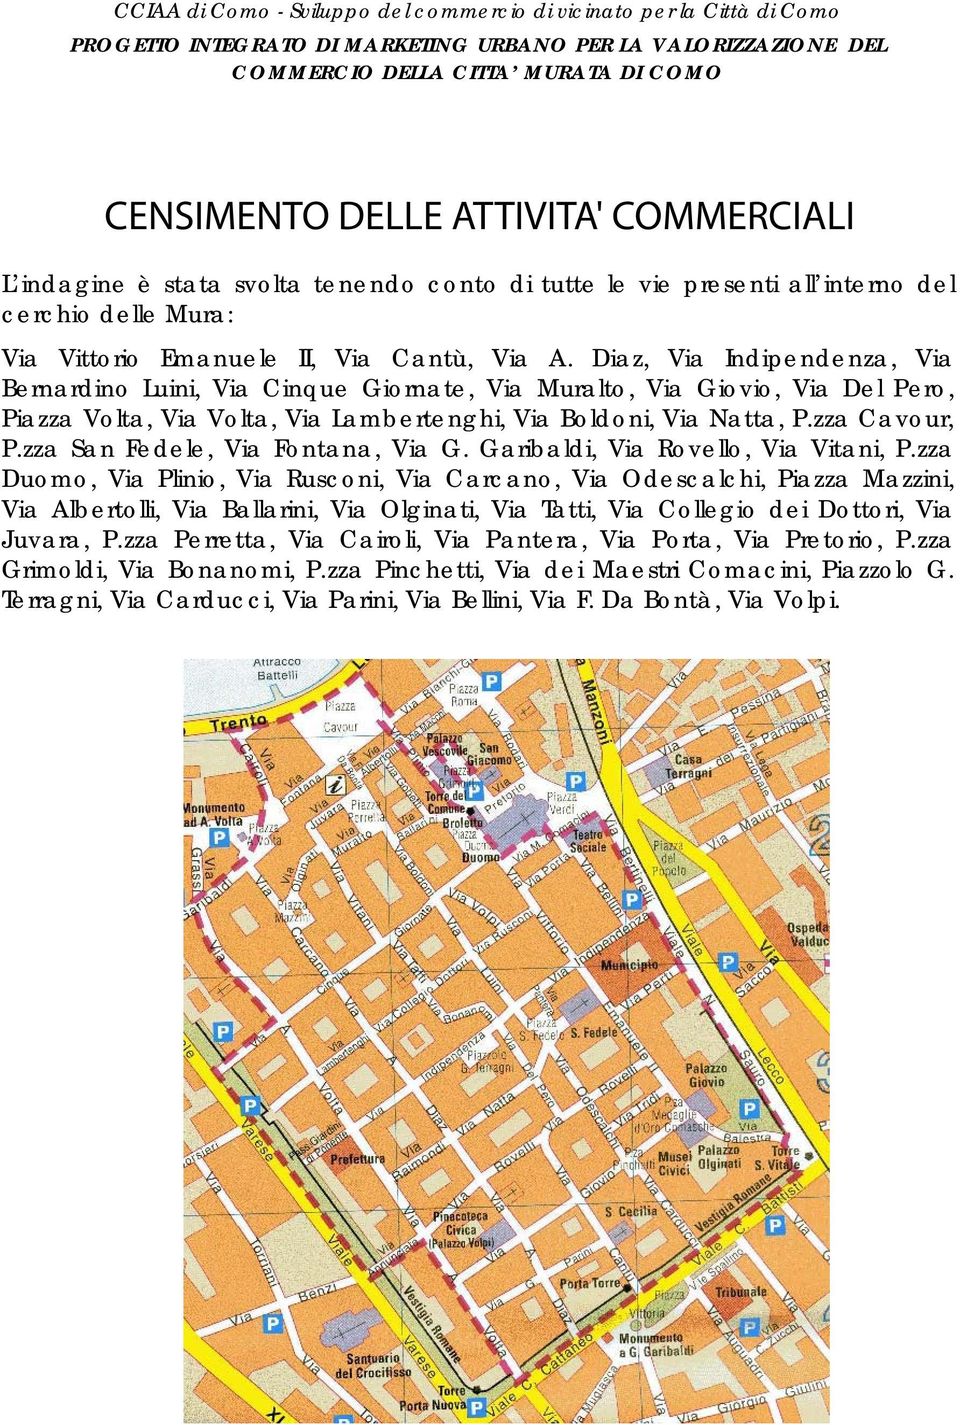 zza San Fedele, Via Fontana, Via G. Garibaldi, Via Rovello, Via Vitani, P.